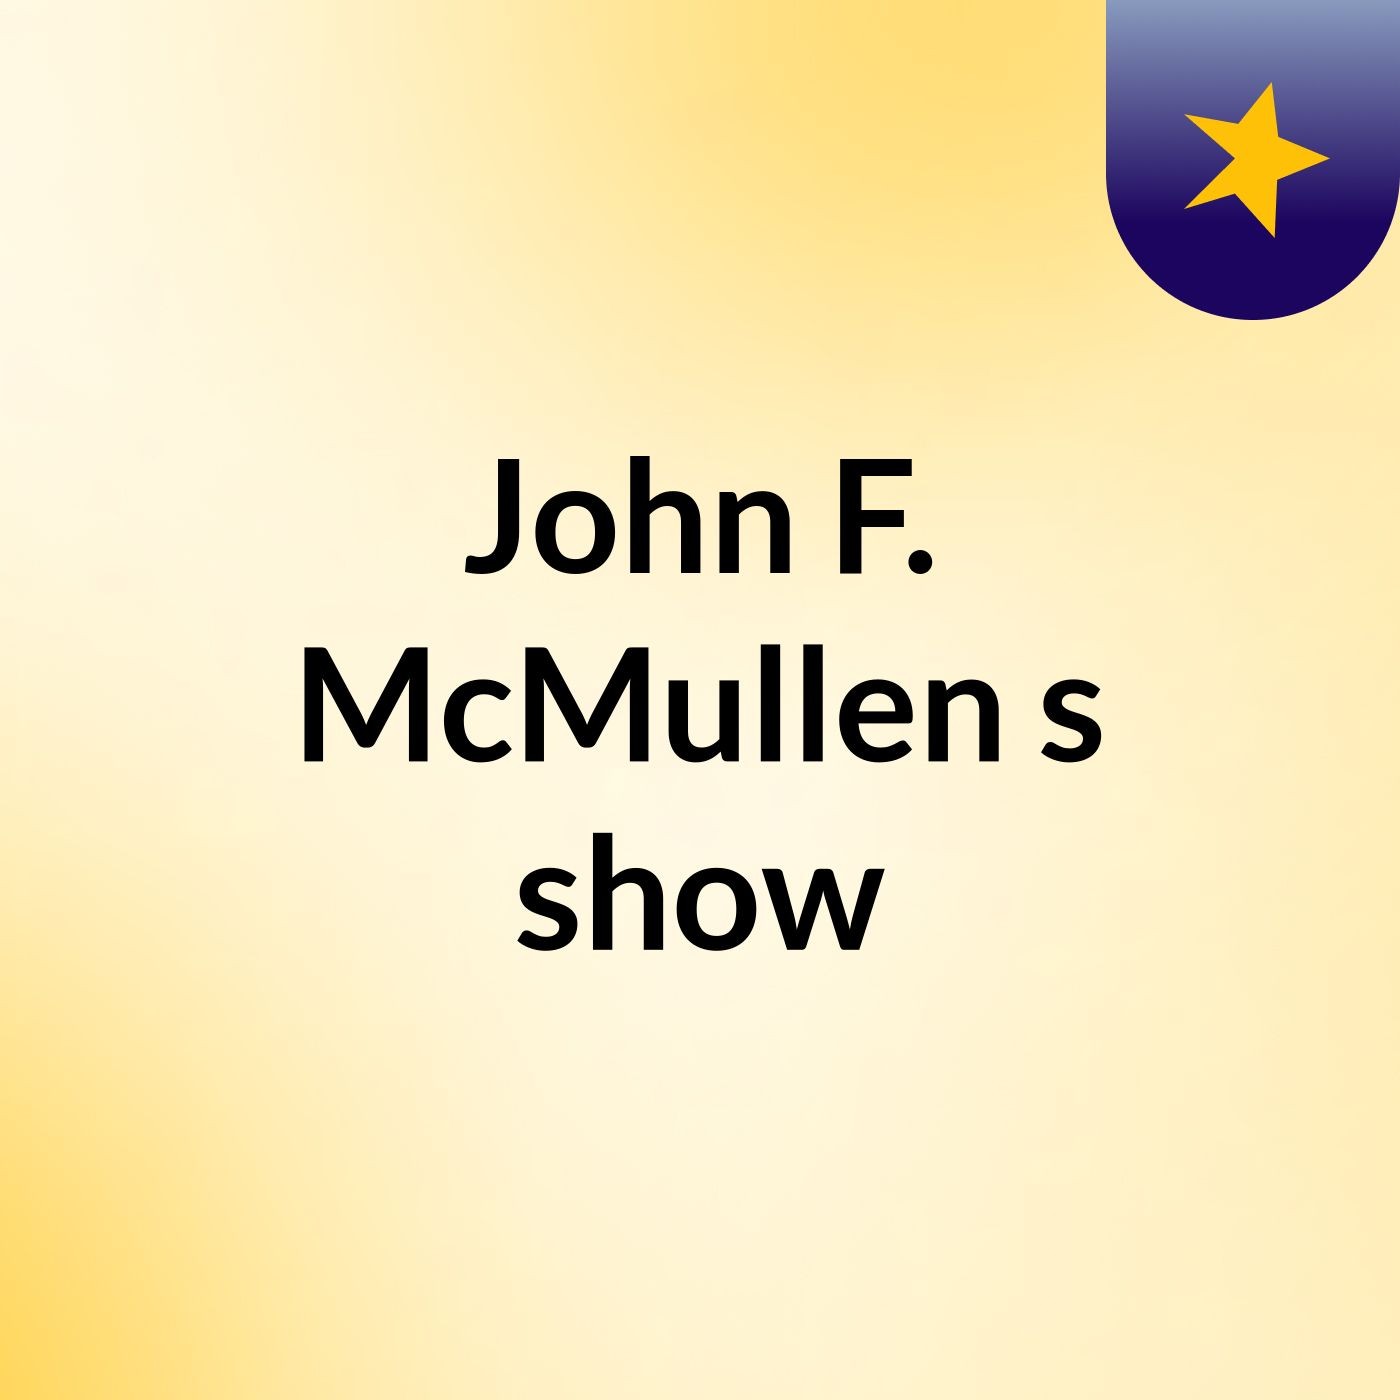 John F. McMullen's show